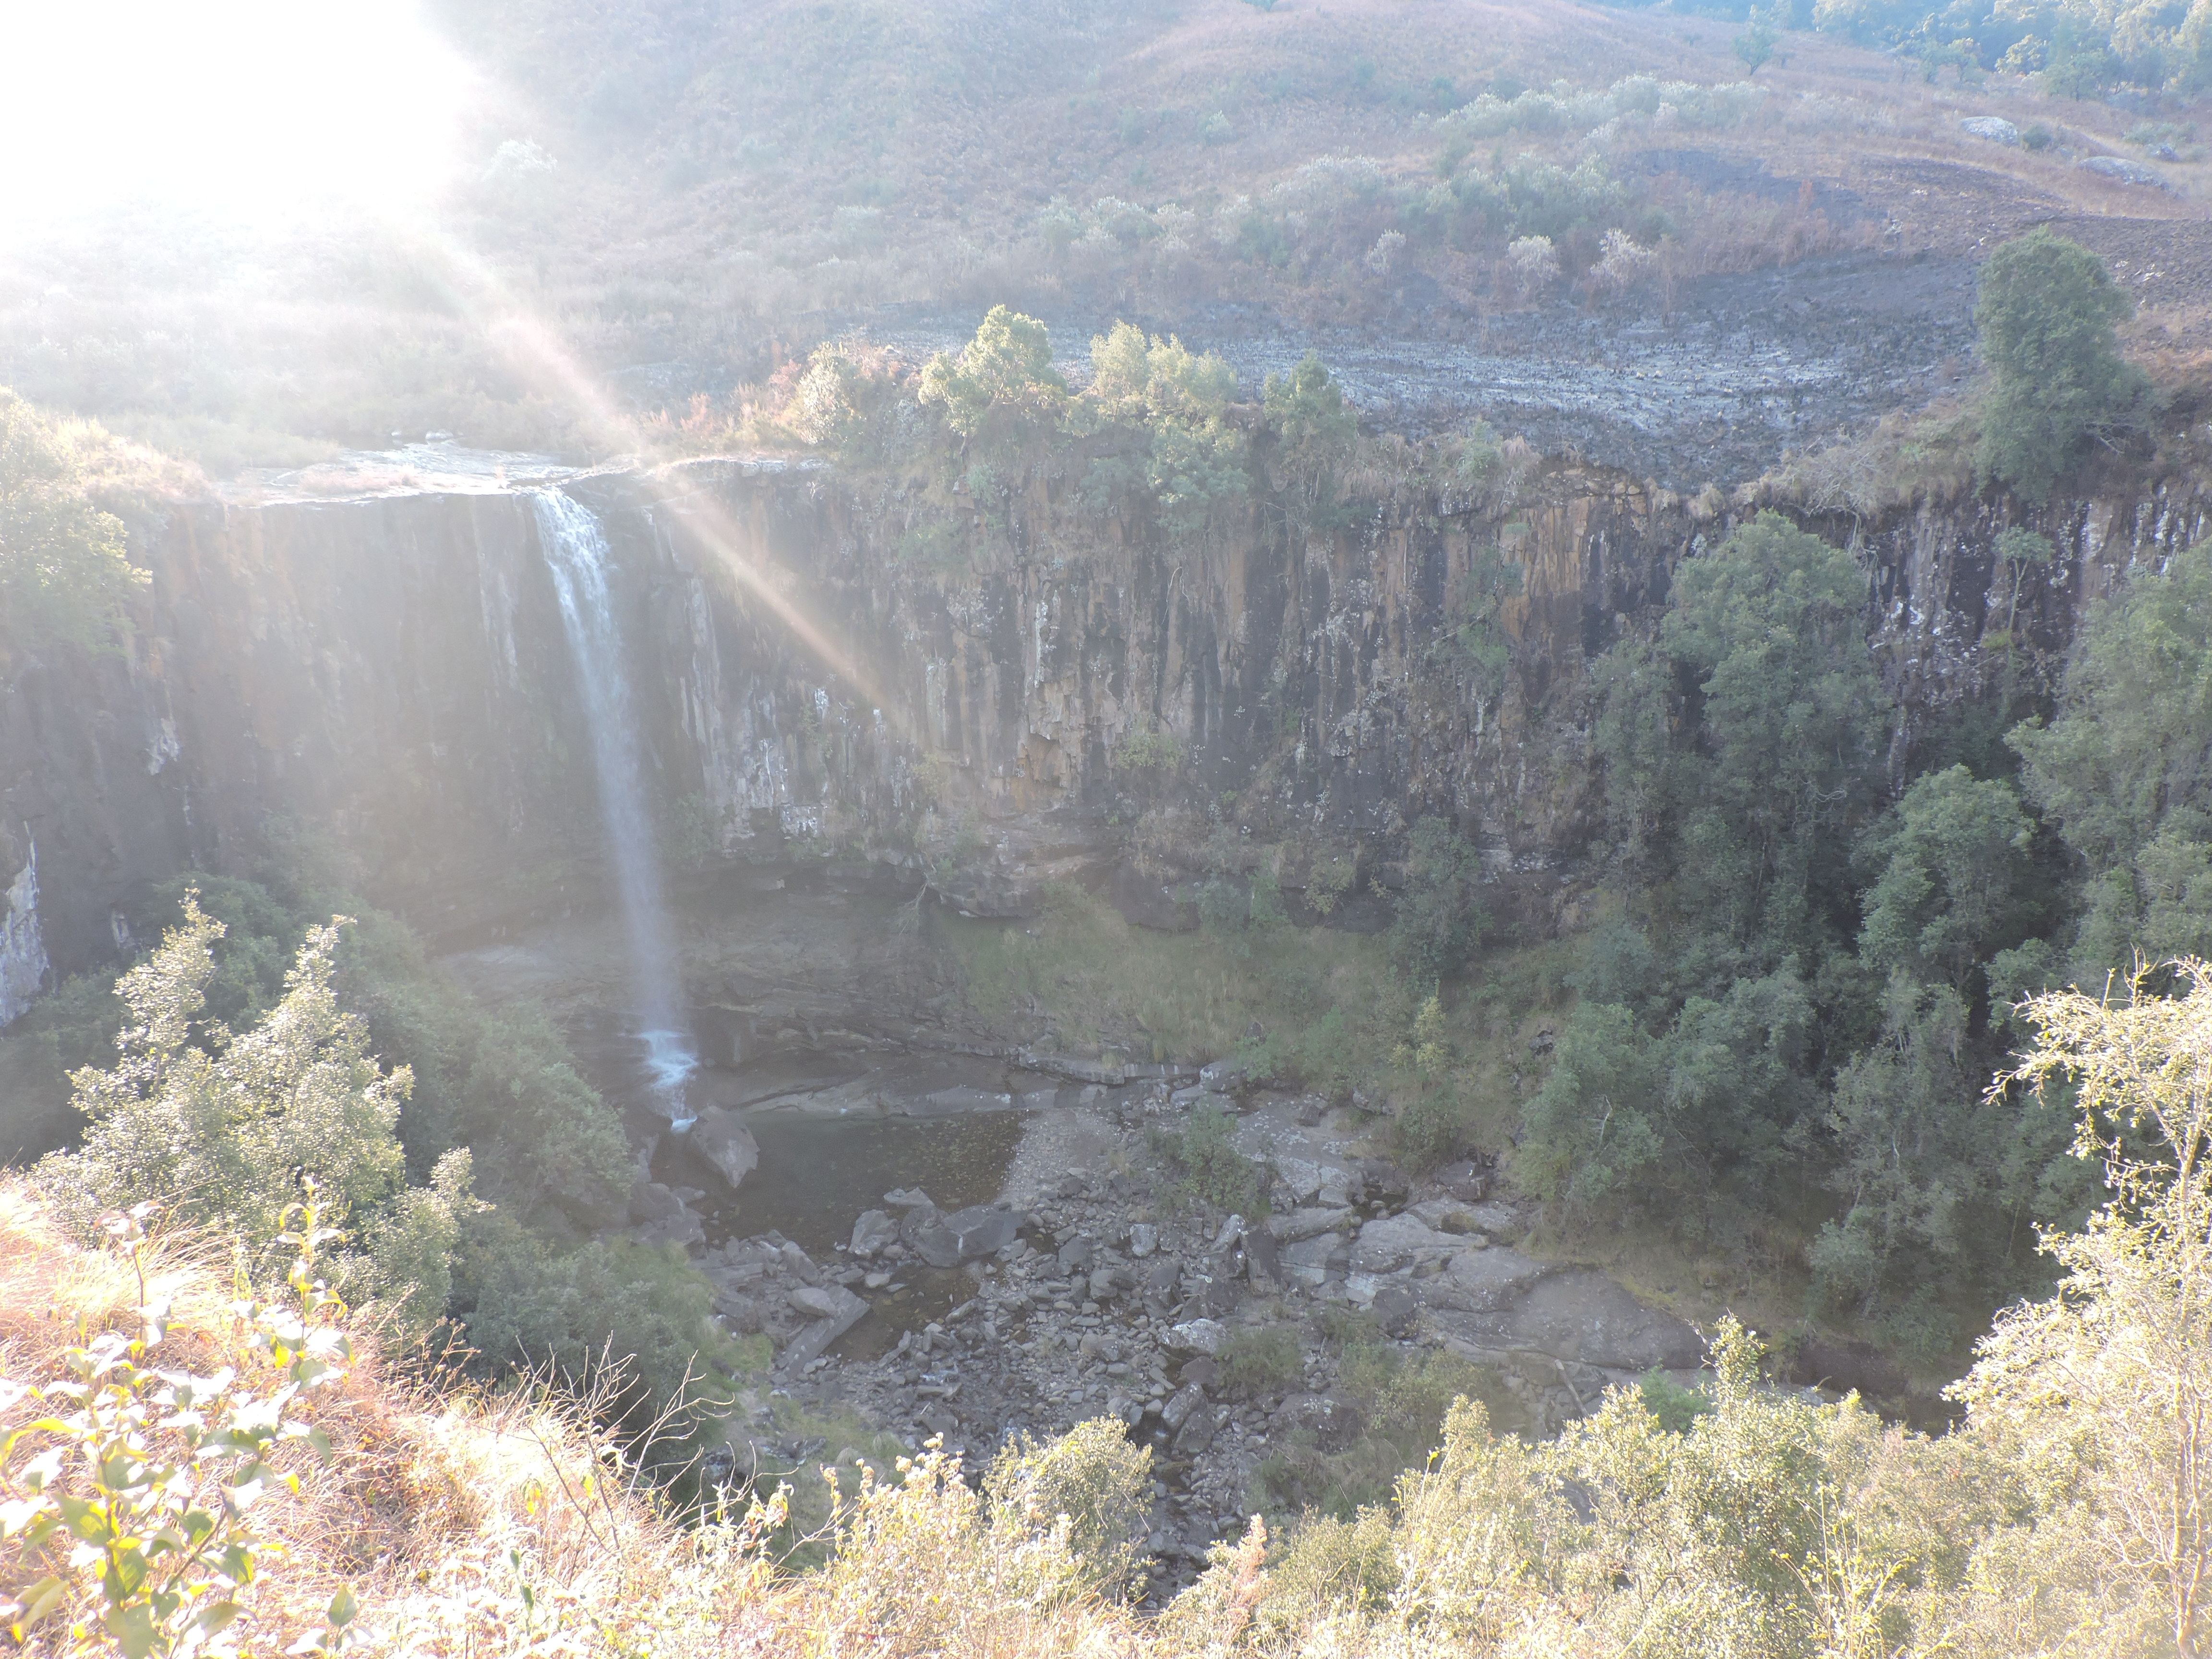 Zuid-Afrika Drakensbergen blogpost